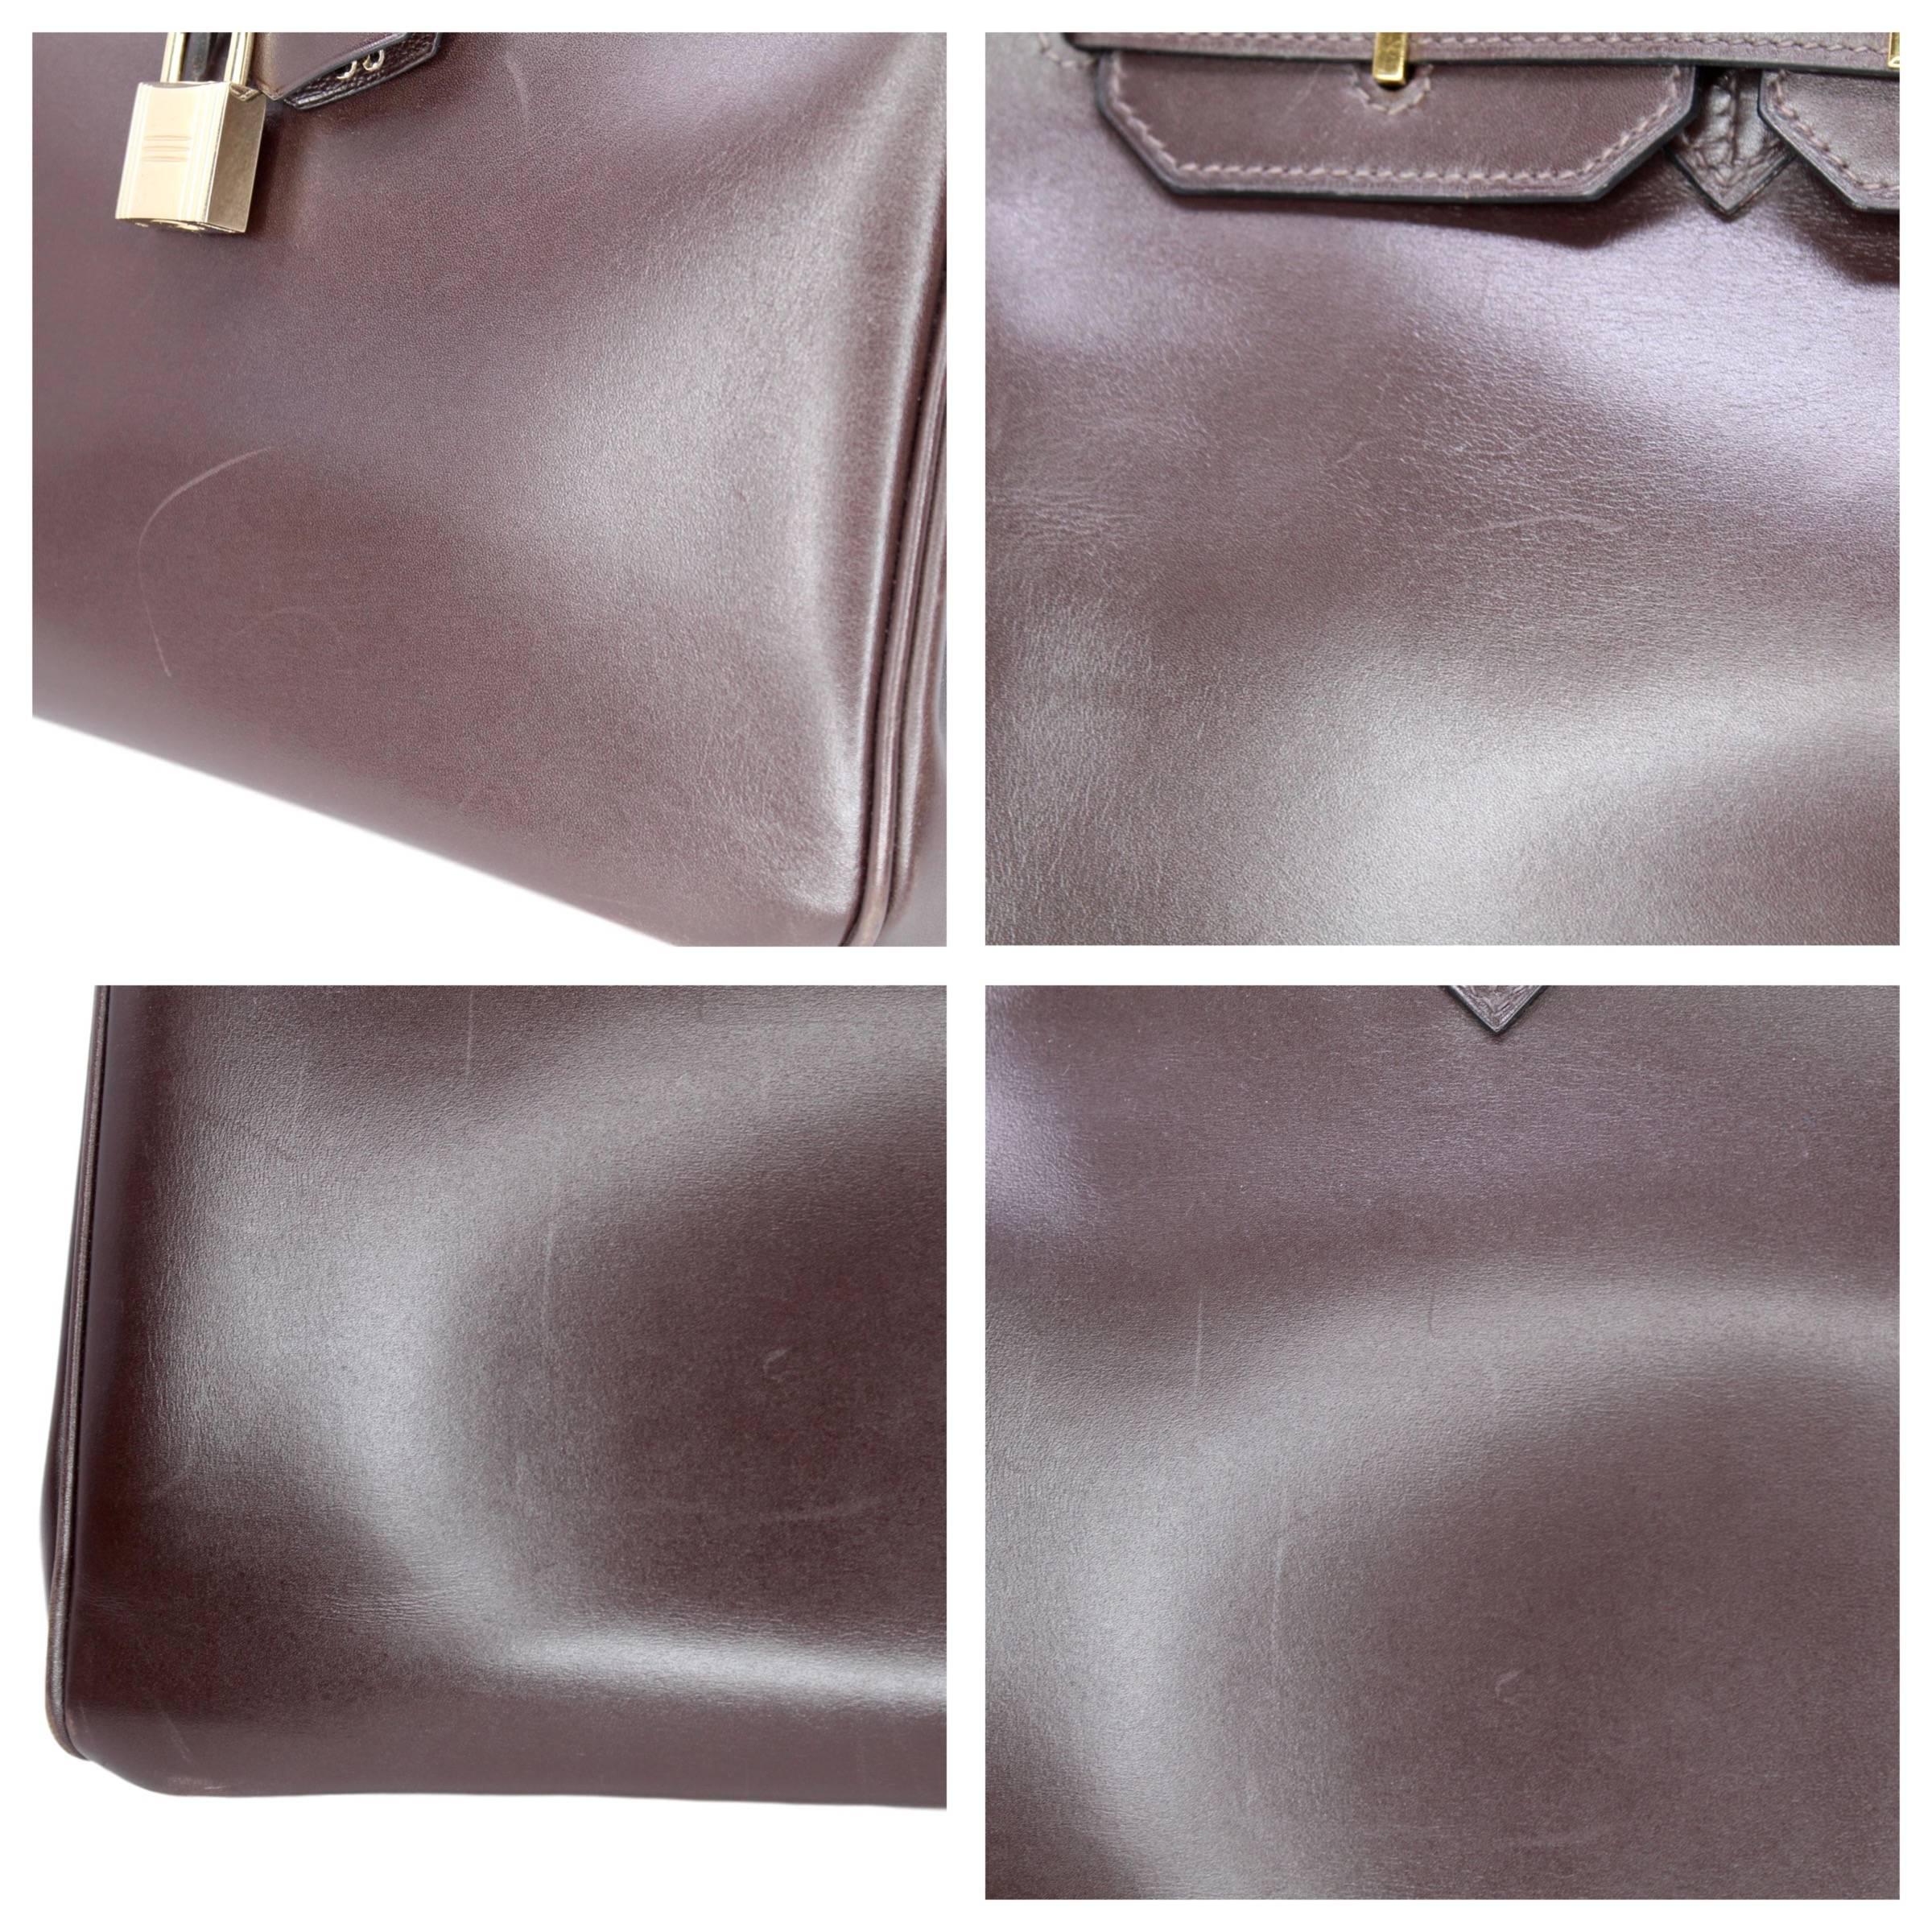 Hermes Birkin 35cm Chocolate Brown Smooth Leather For Sale 1